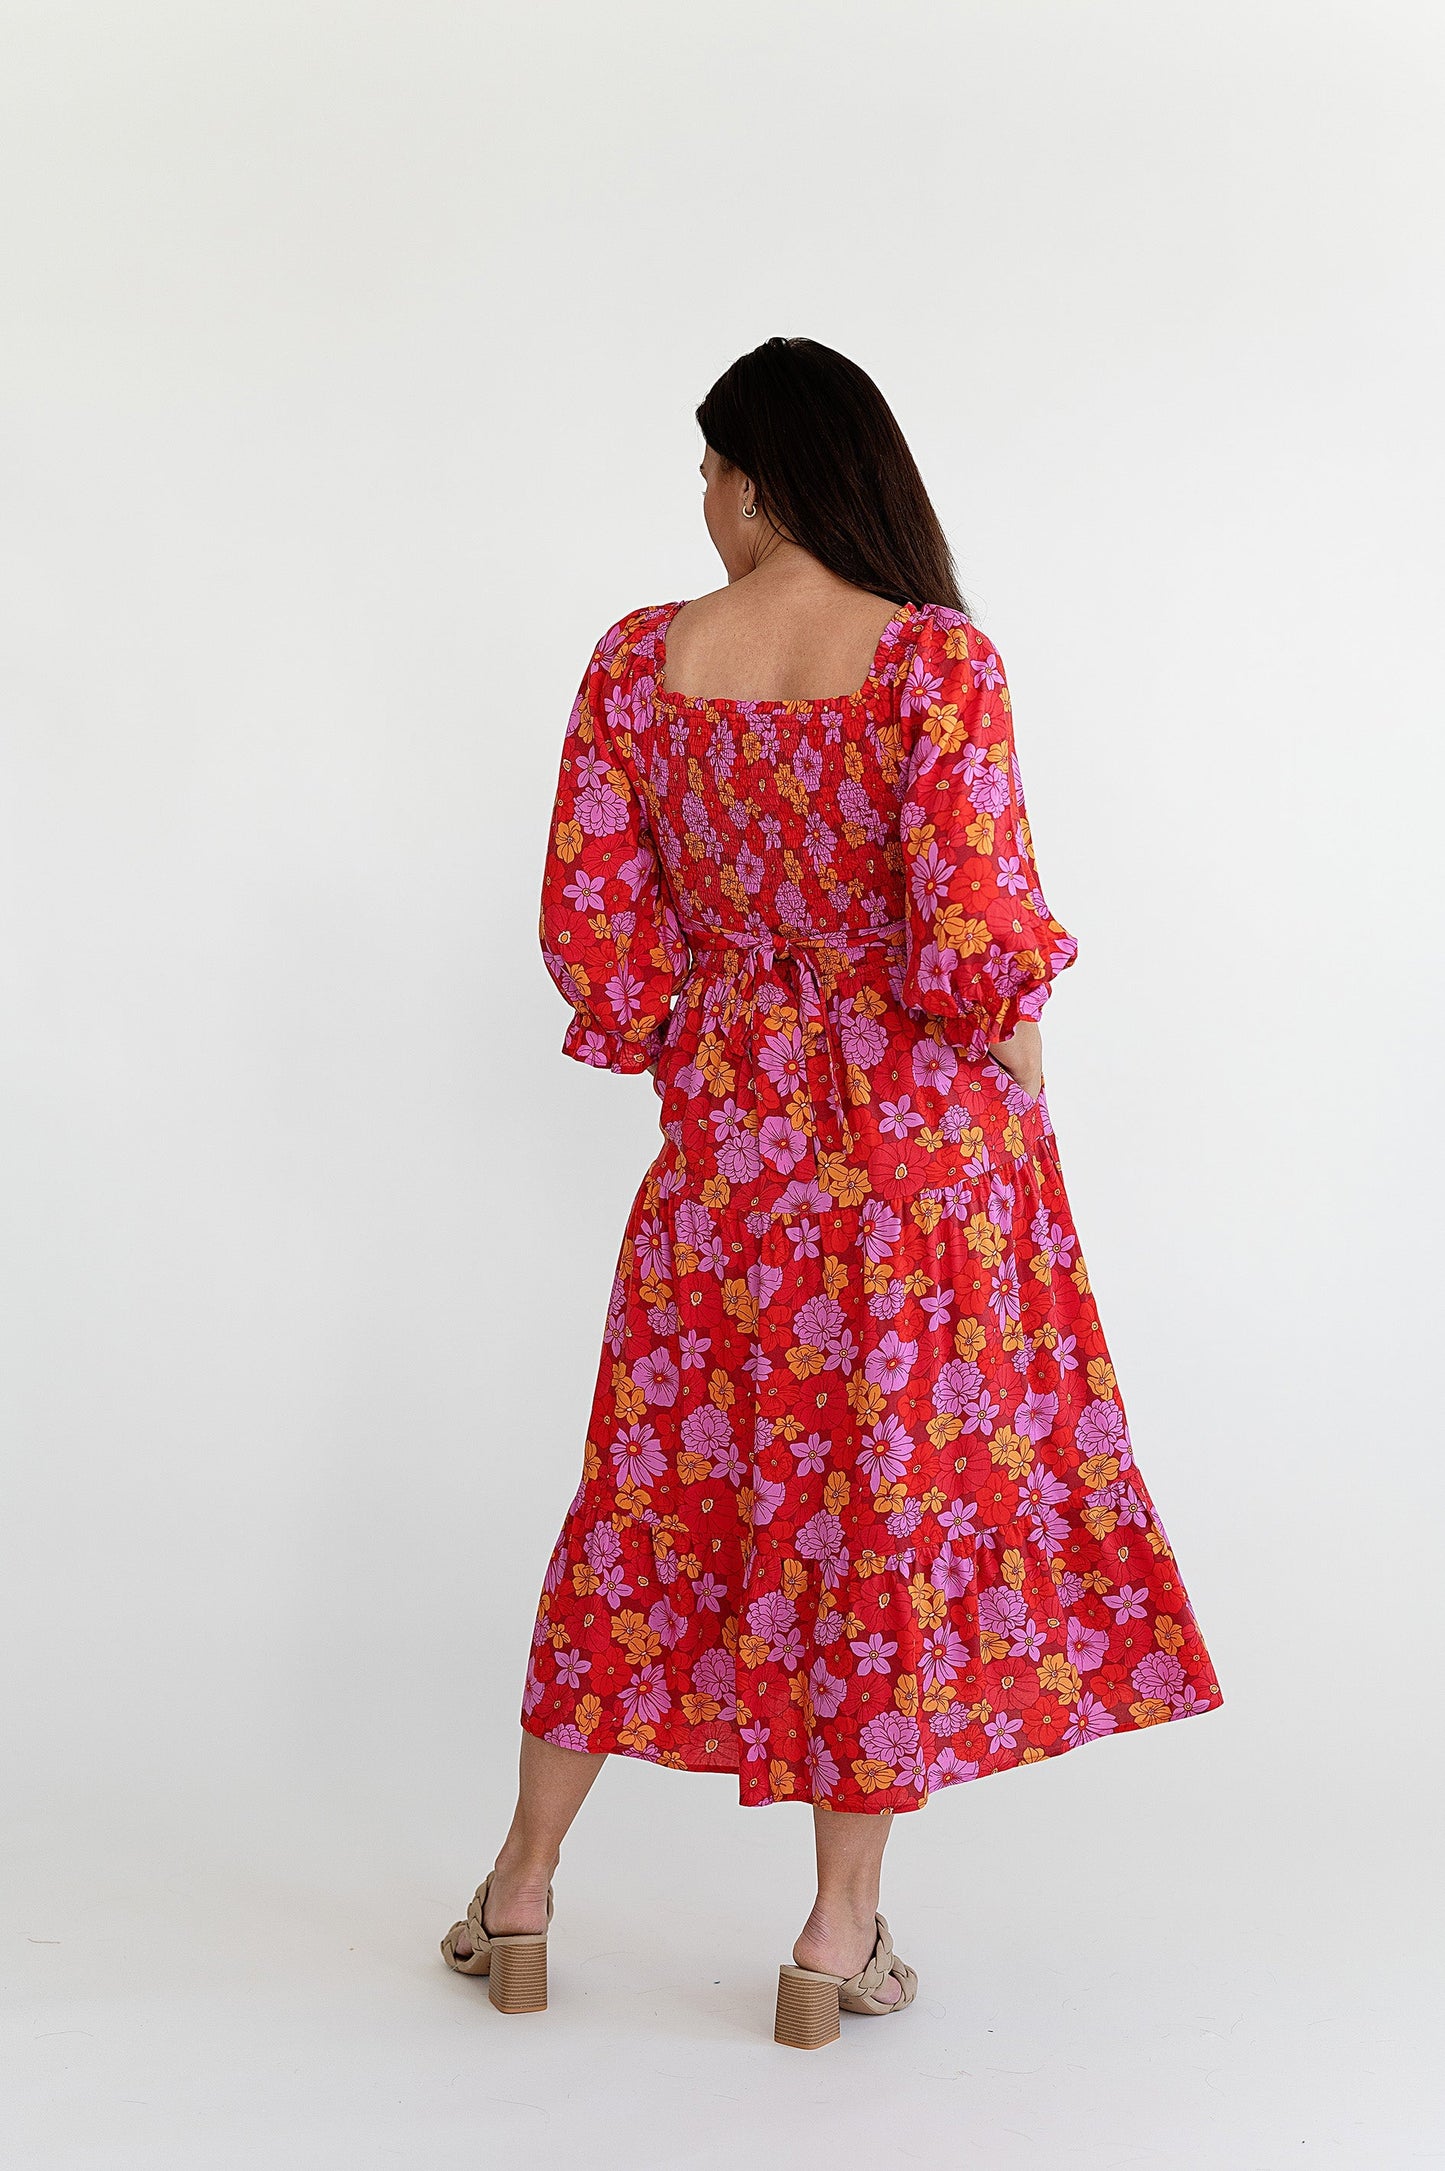 yayaq™-Selena Bright Floral Dress